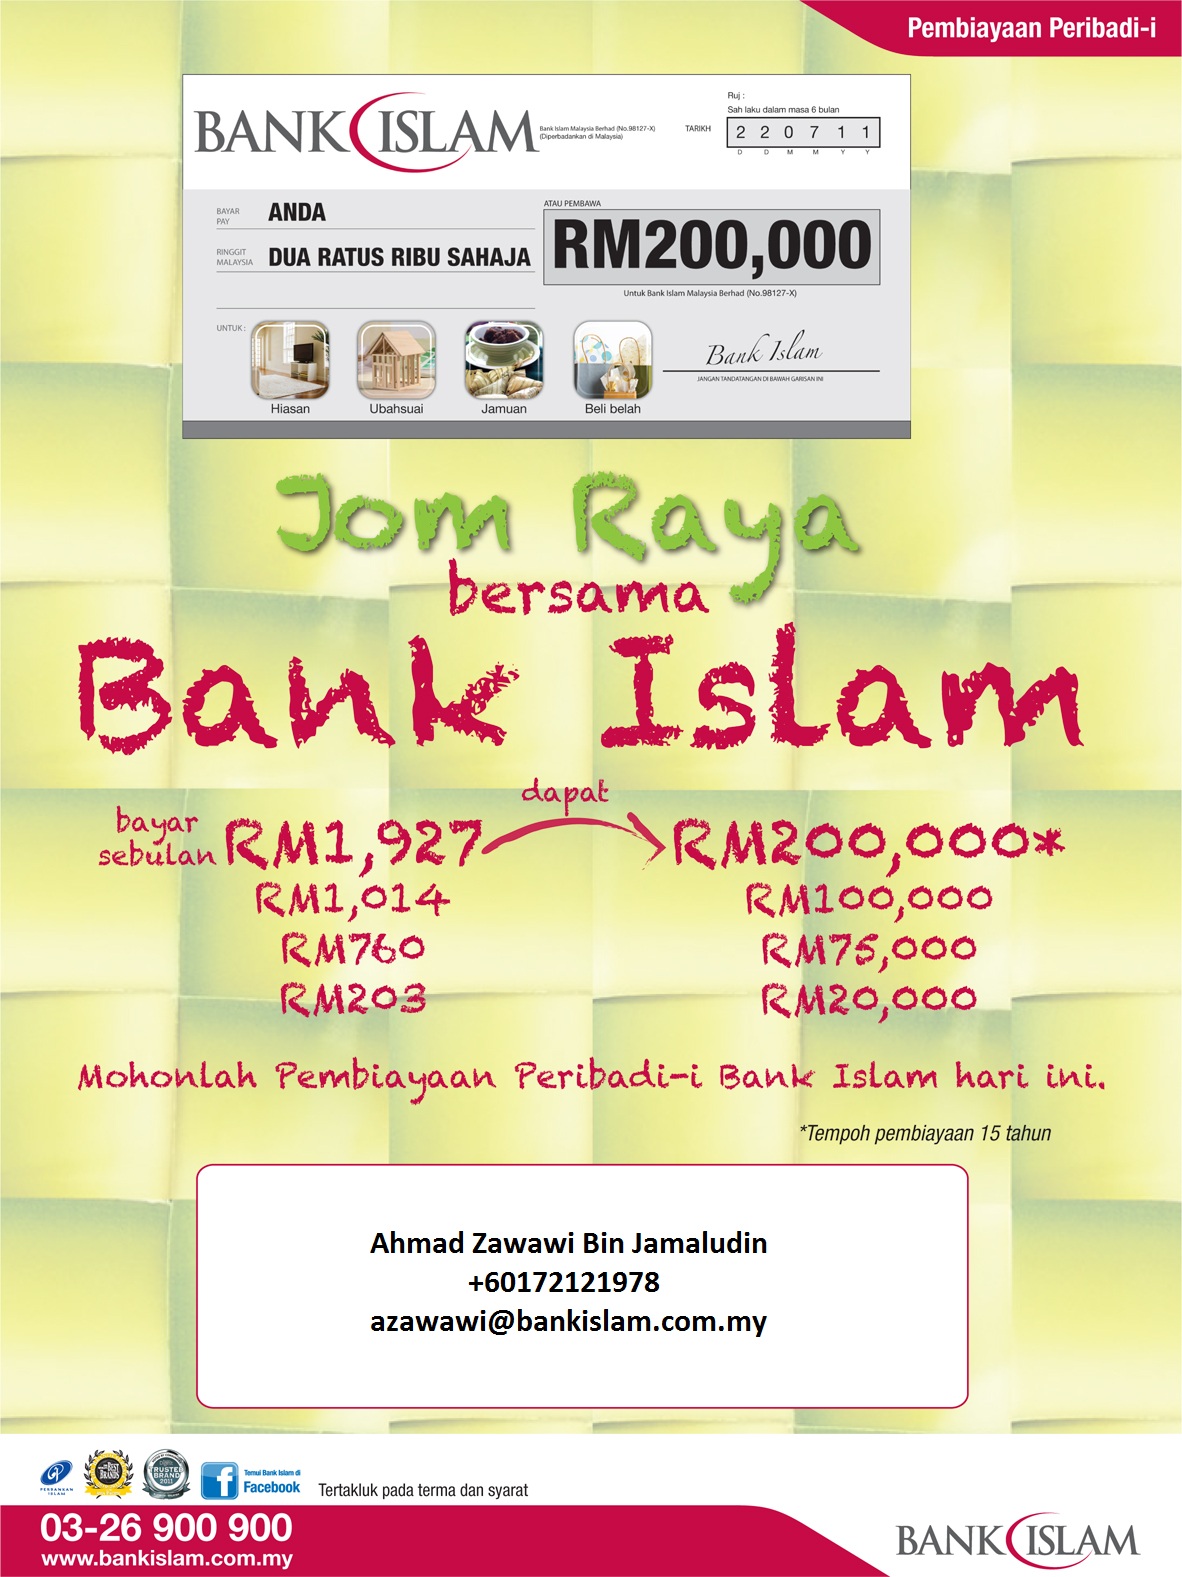 Calculator personal loan bank islam PIBB